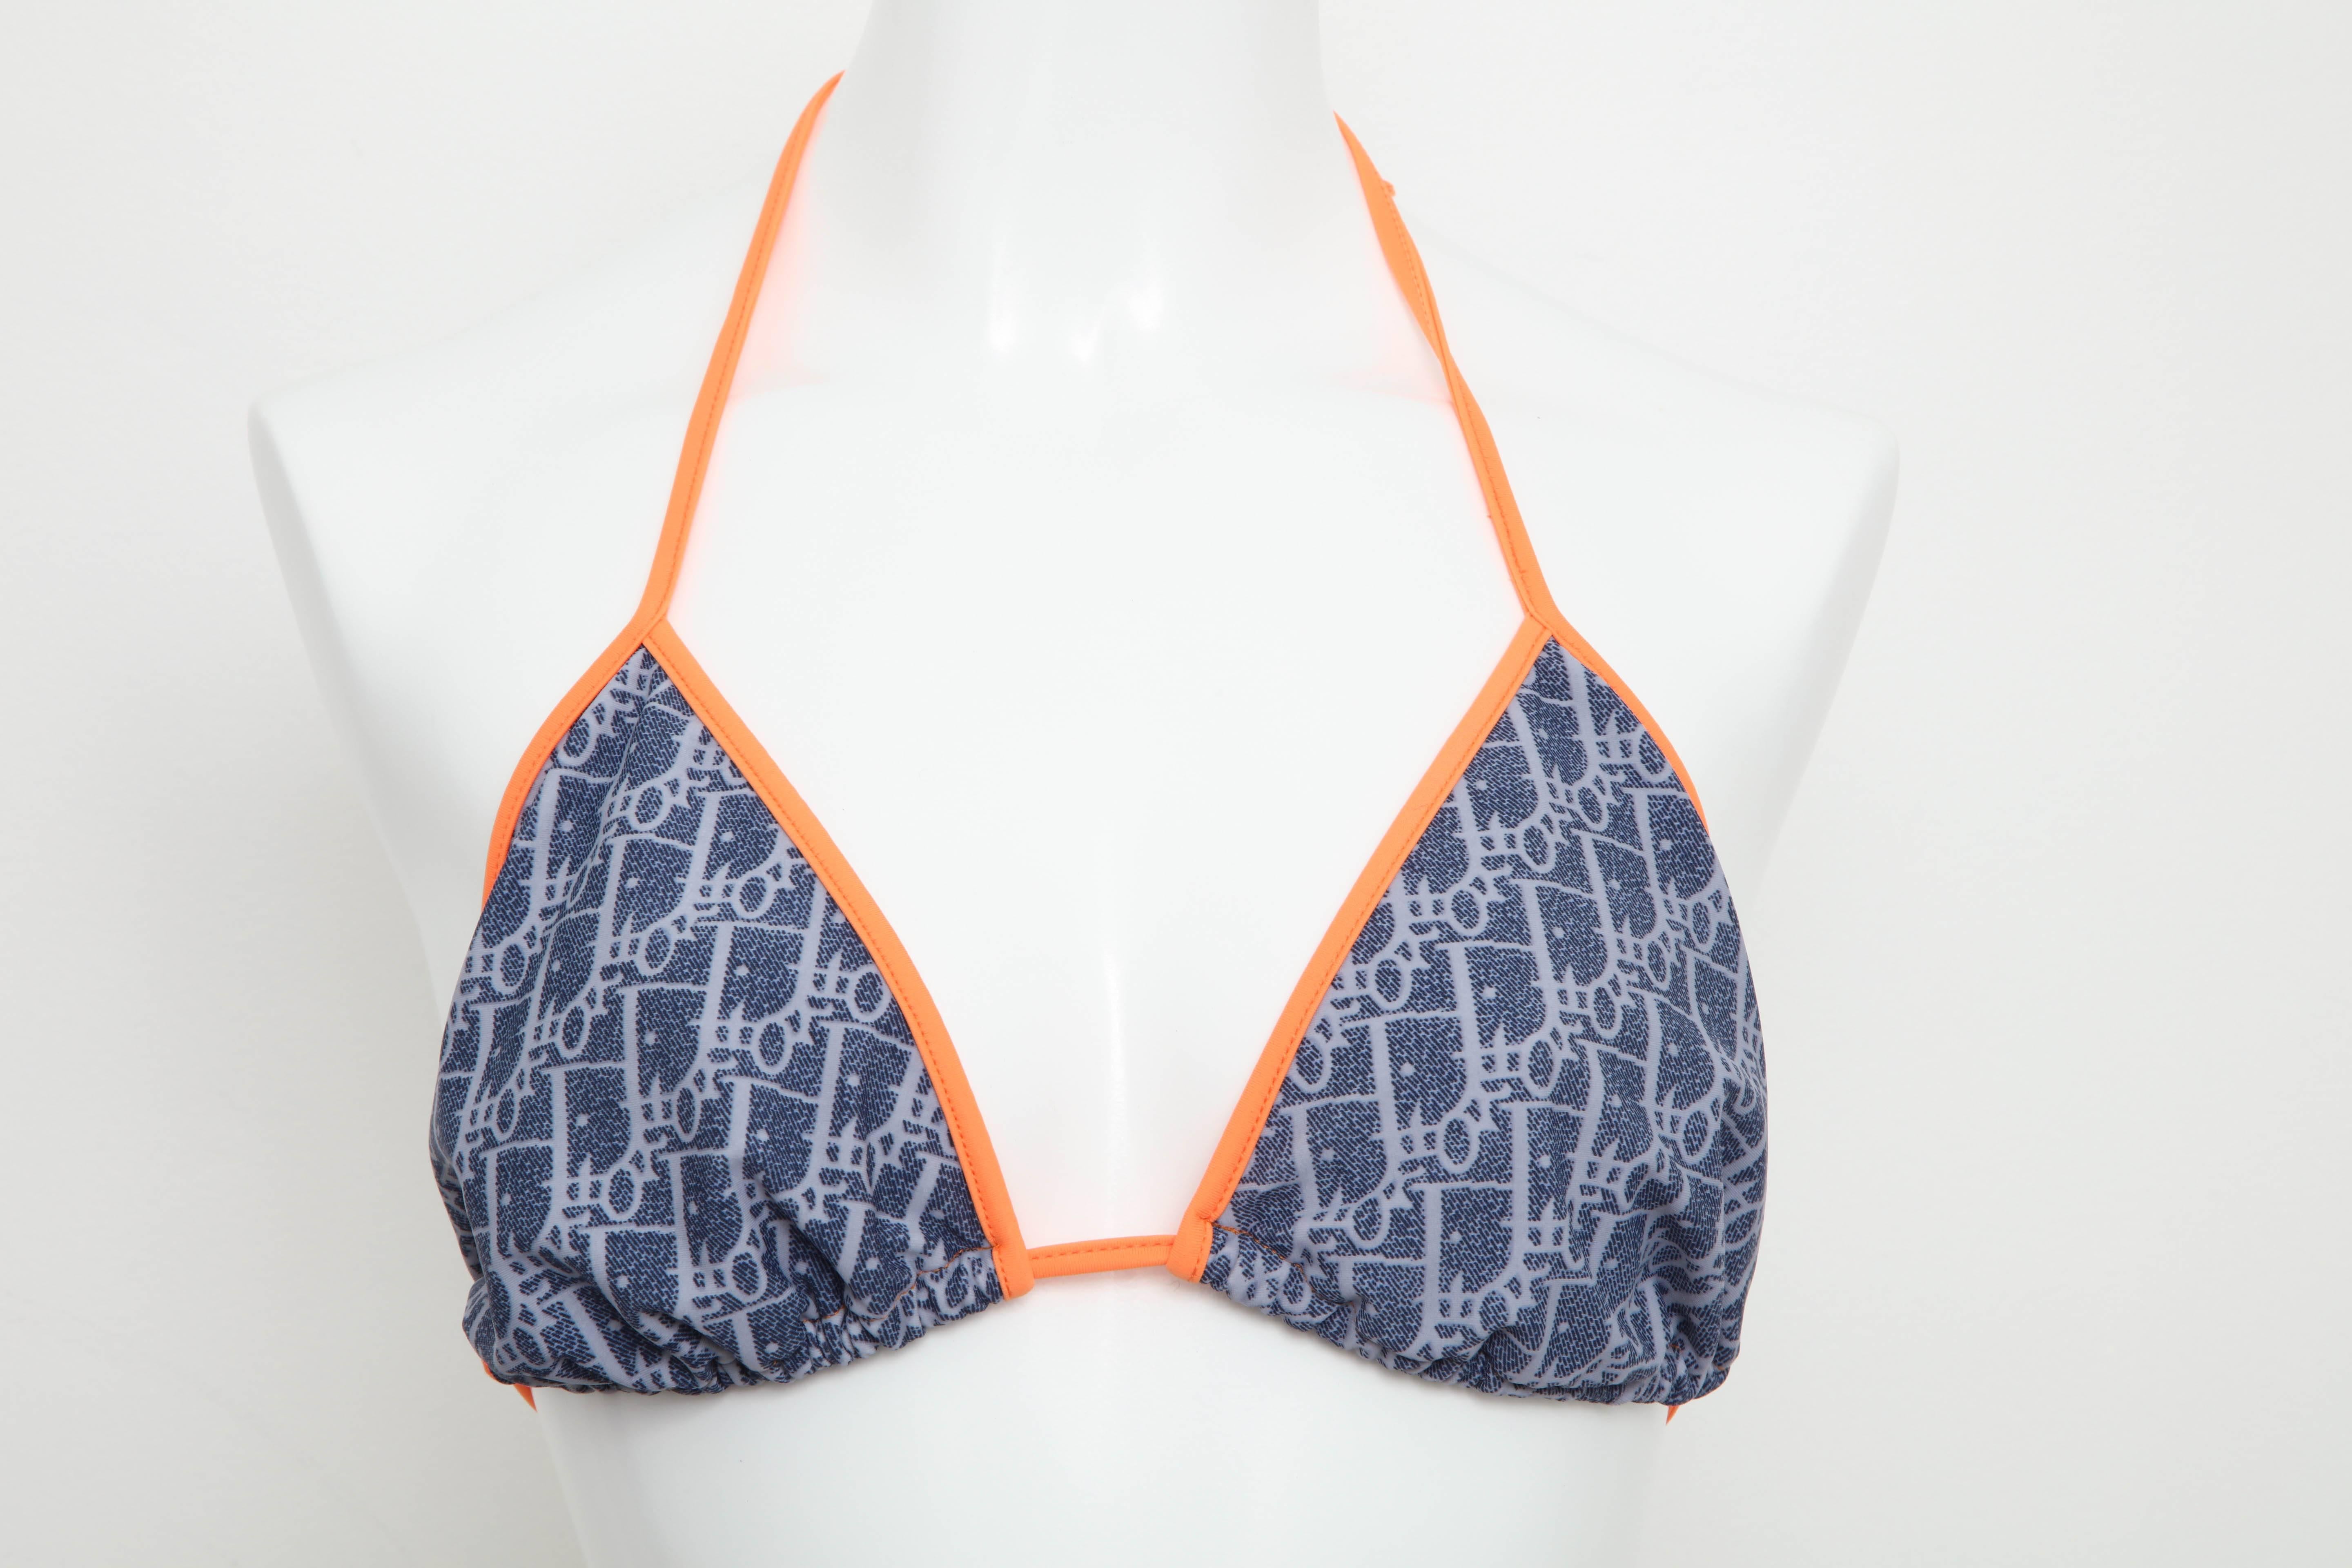 John Galliano for Christian Dior navy blue logo bikini with orange trimming. 

Size 40